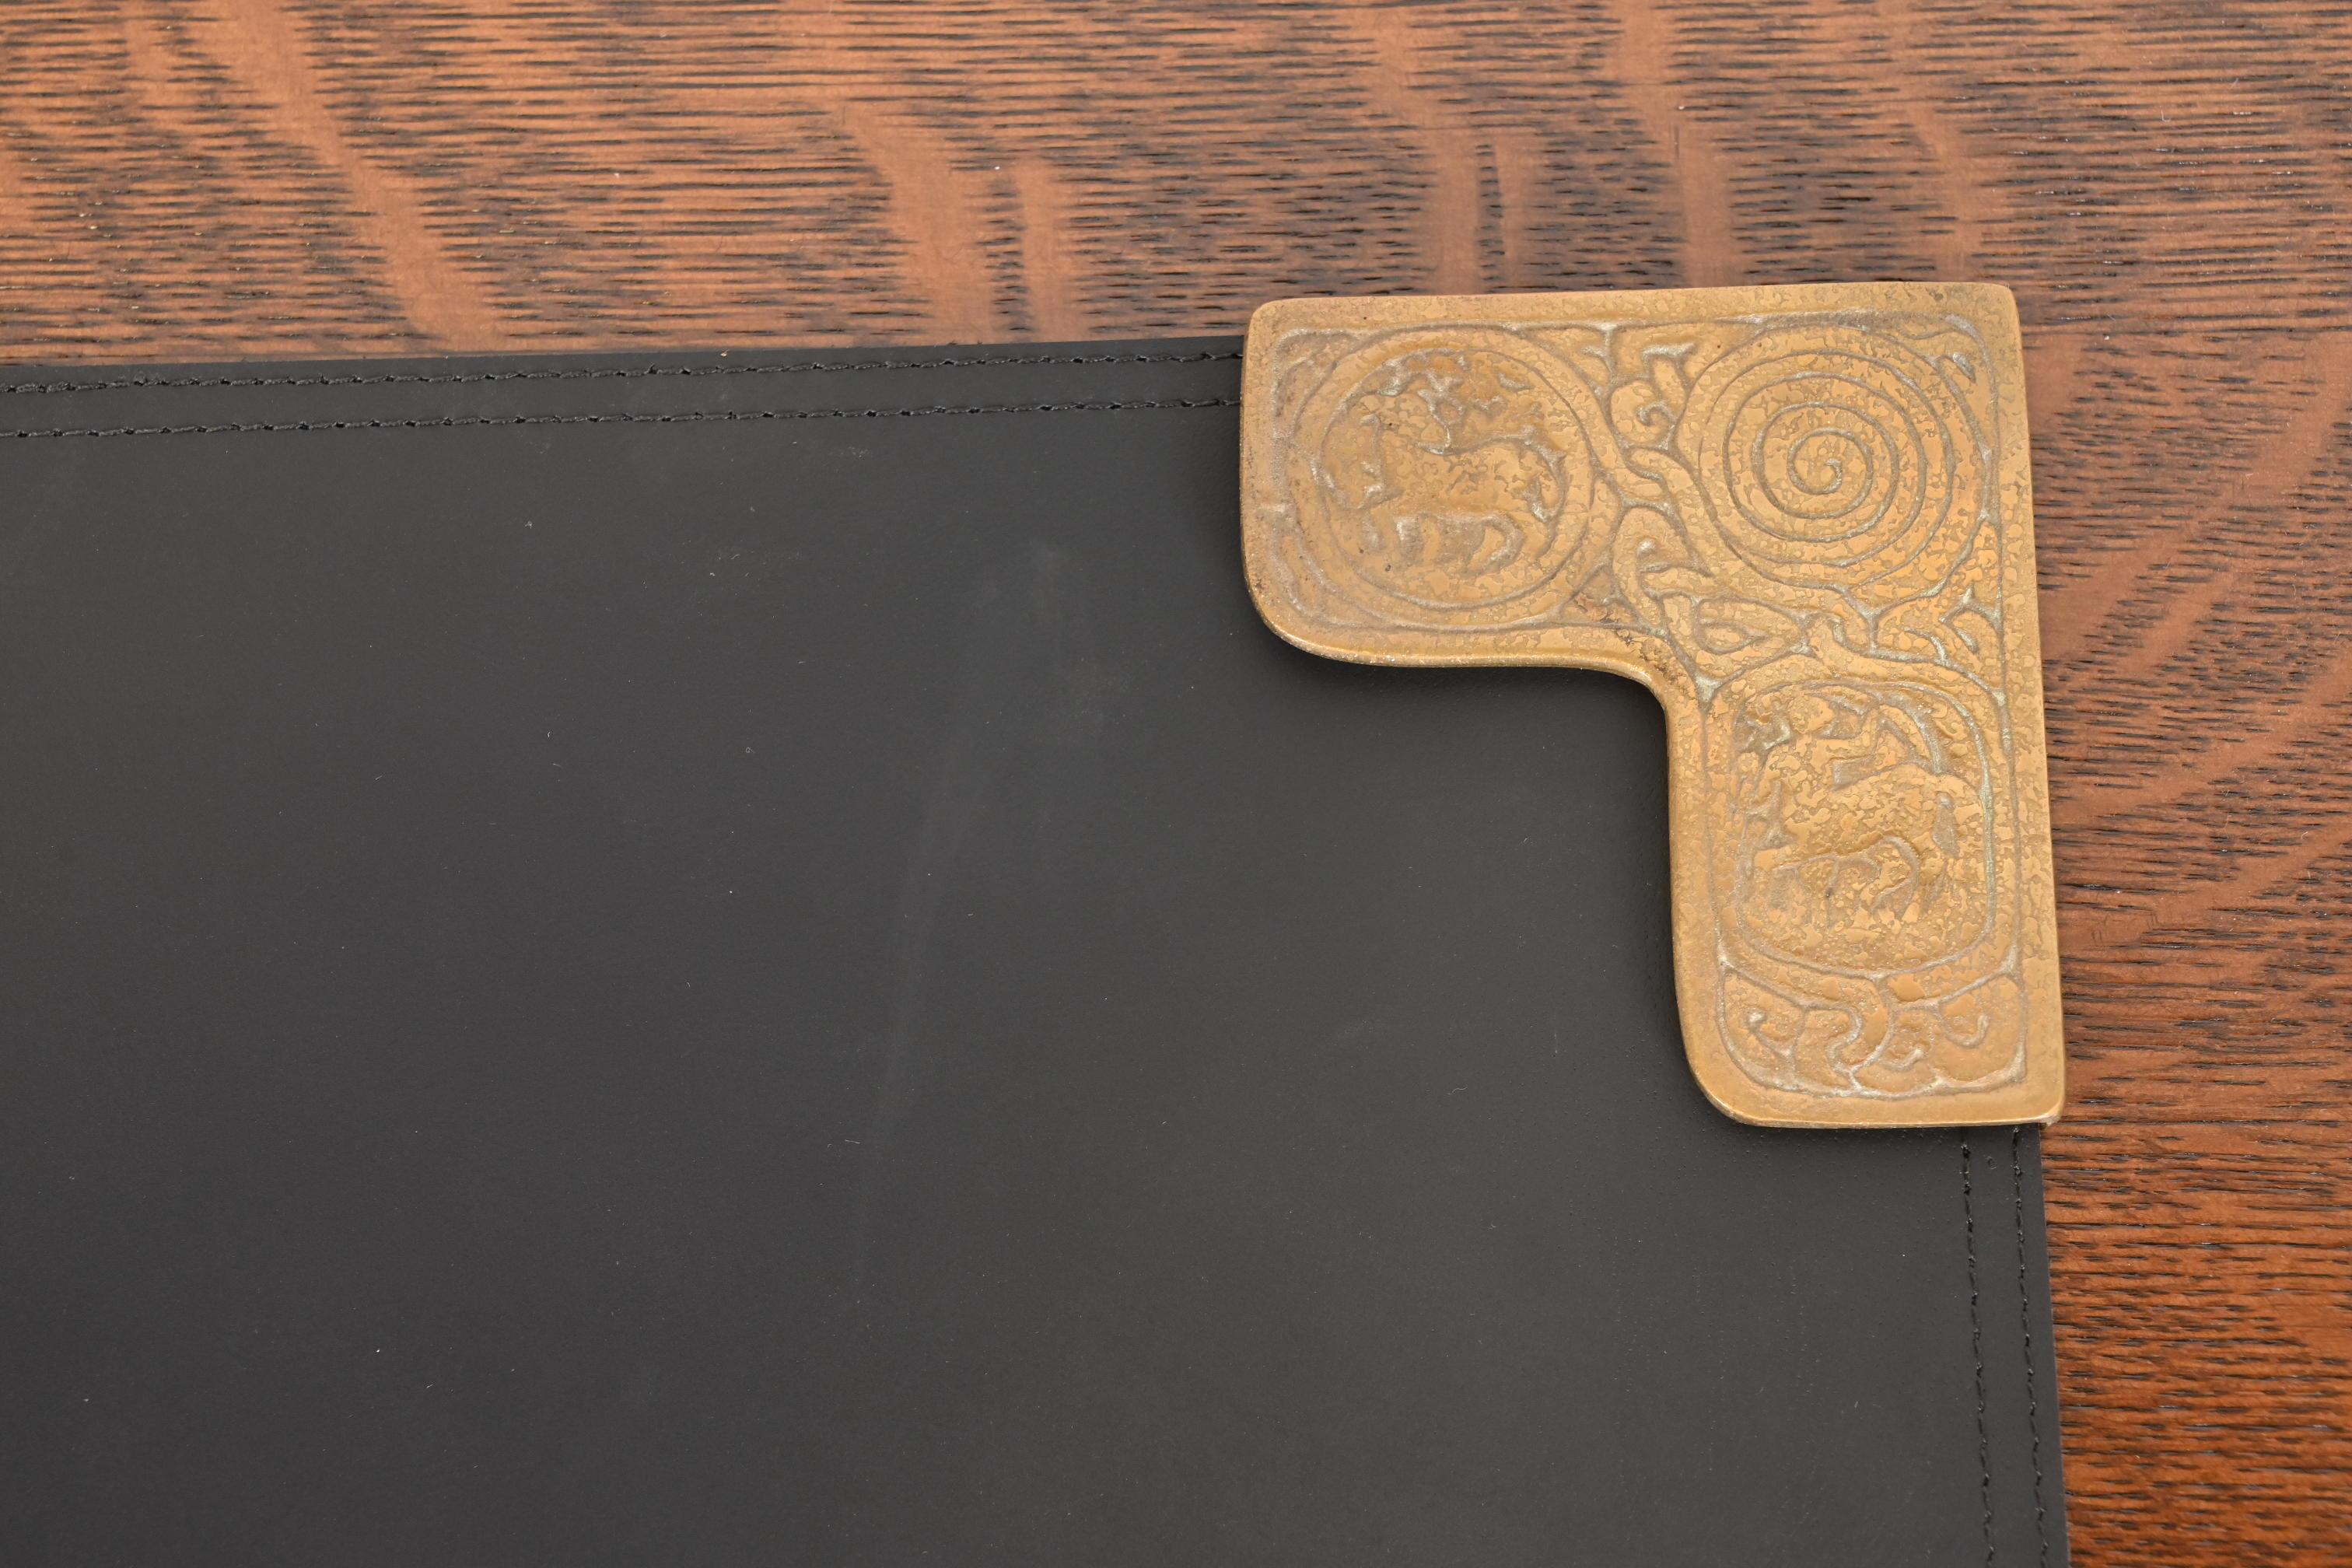 Tiffany Studios Zodiac Bronze Doré Blotter Corners With Leather Desk Blotter For Sale 2